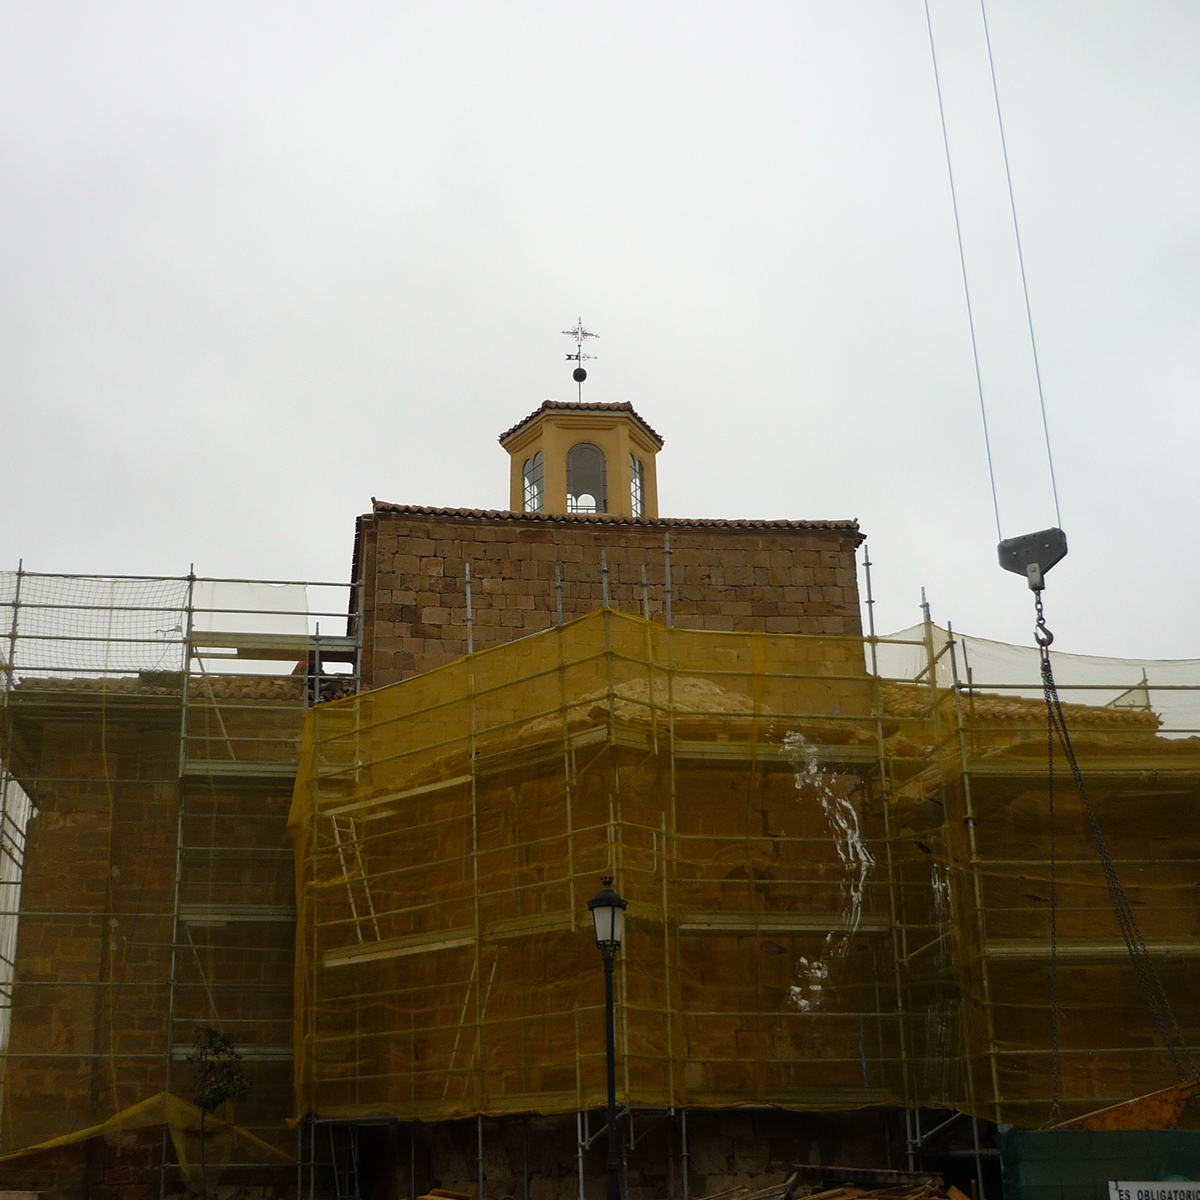 Restauración-de-cubiertas-de-la-iglesia-de-Aguilar-de-Bureba-Burgos-03